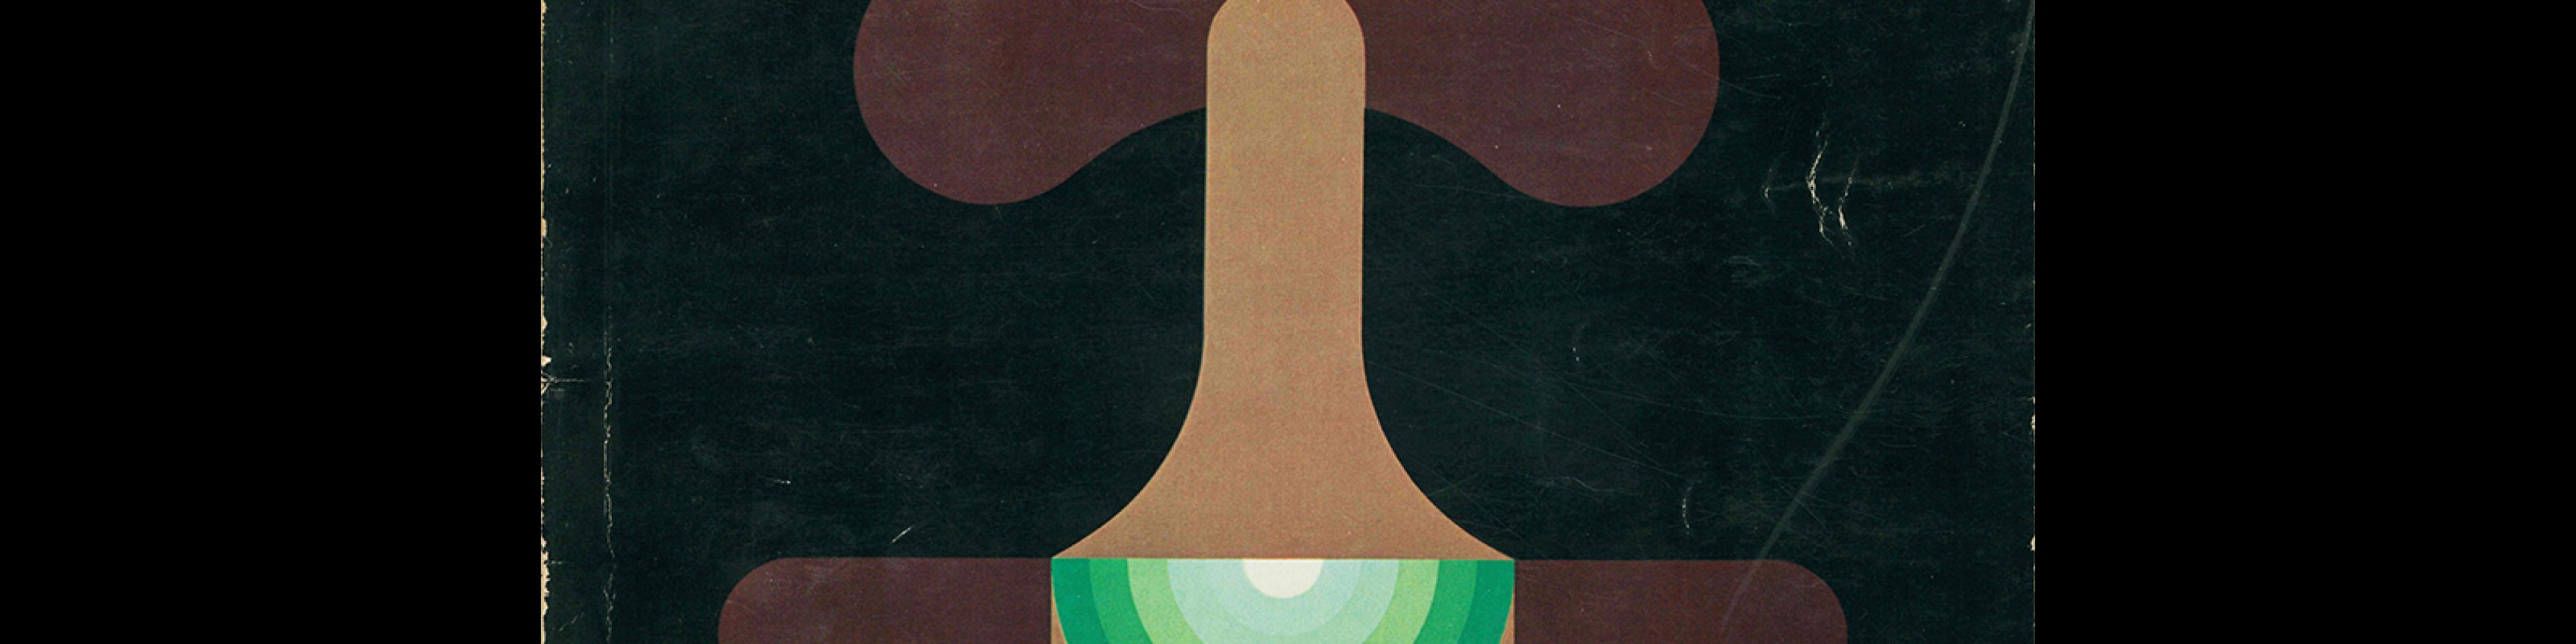 Idea 122, 1974. Cover design by Erbert Carboni.